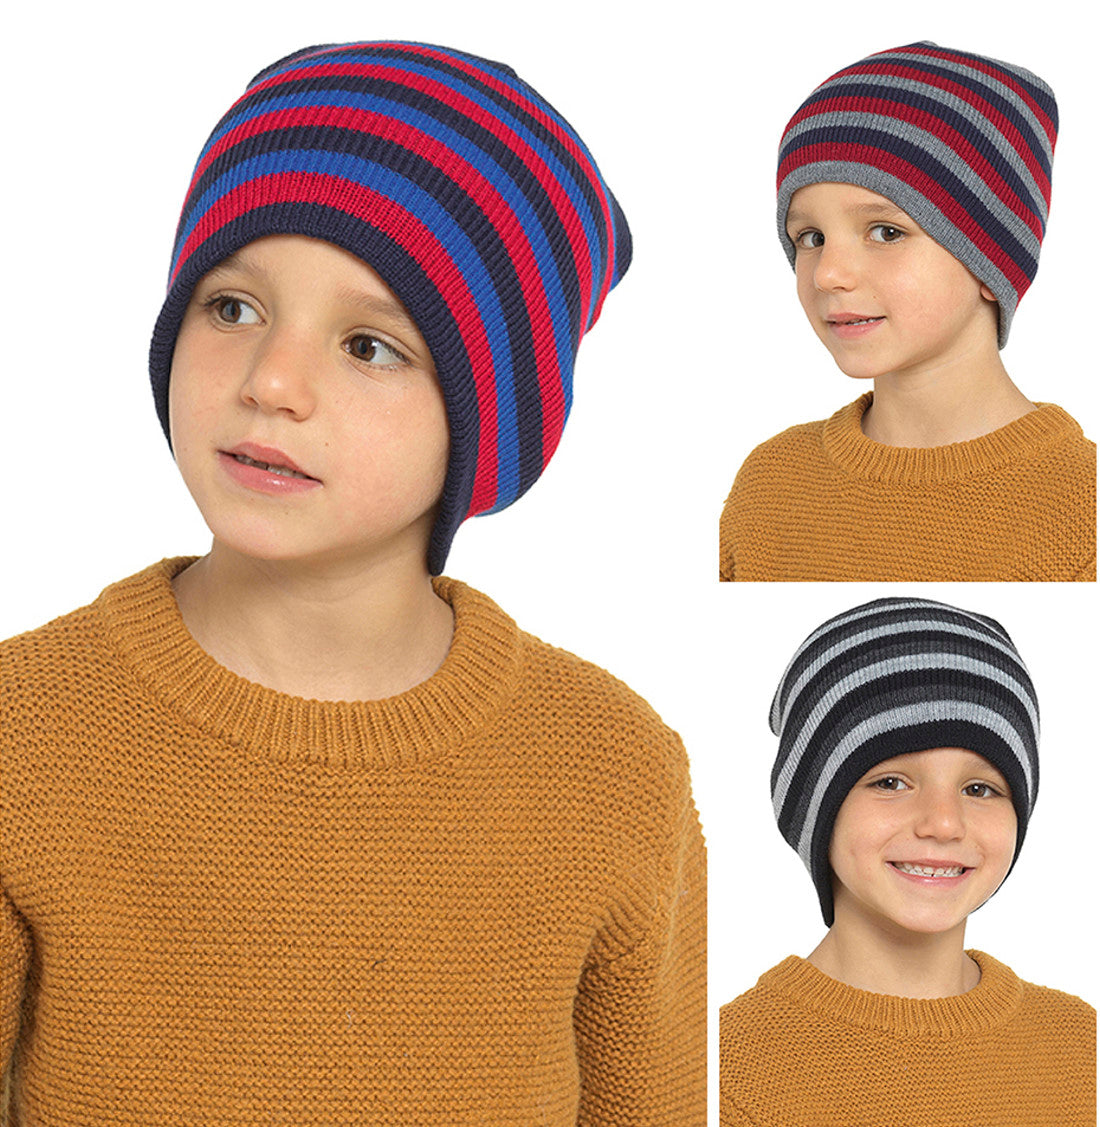 Boys beanie warm winter hat.  Stripey hat in several colours.